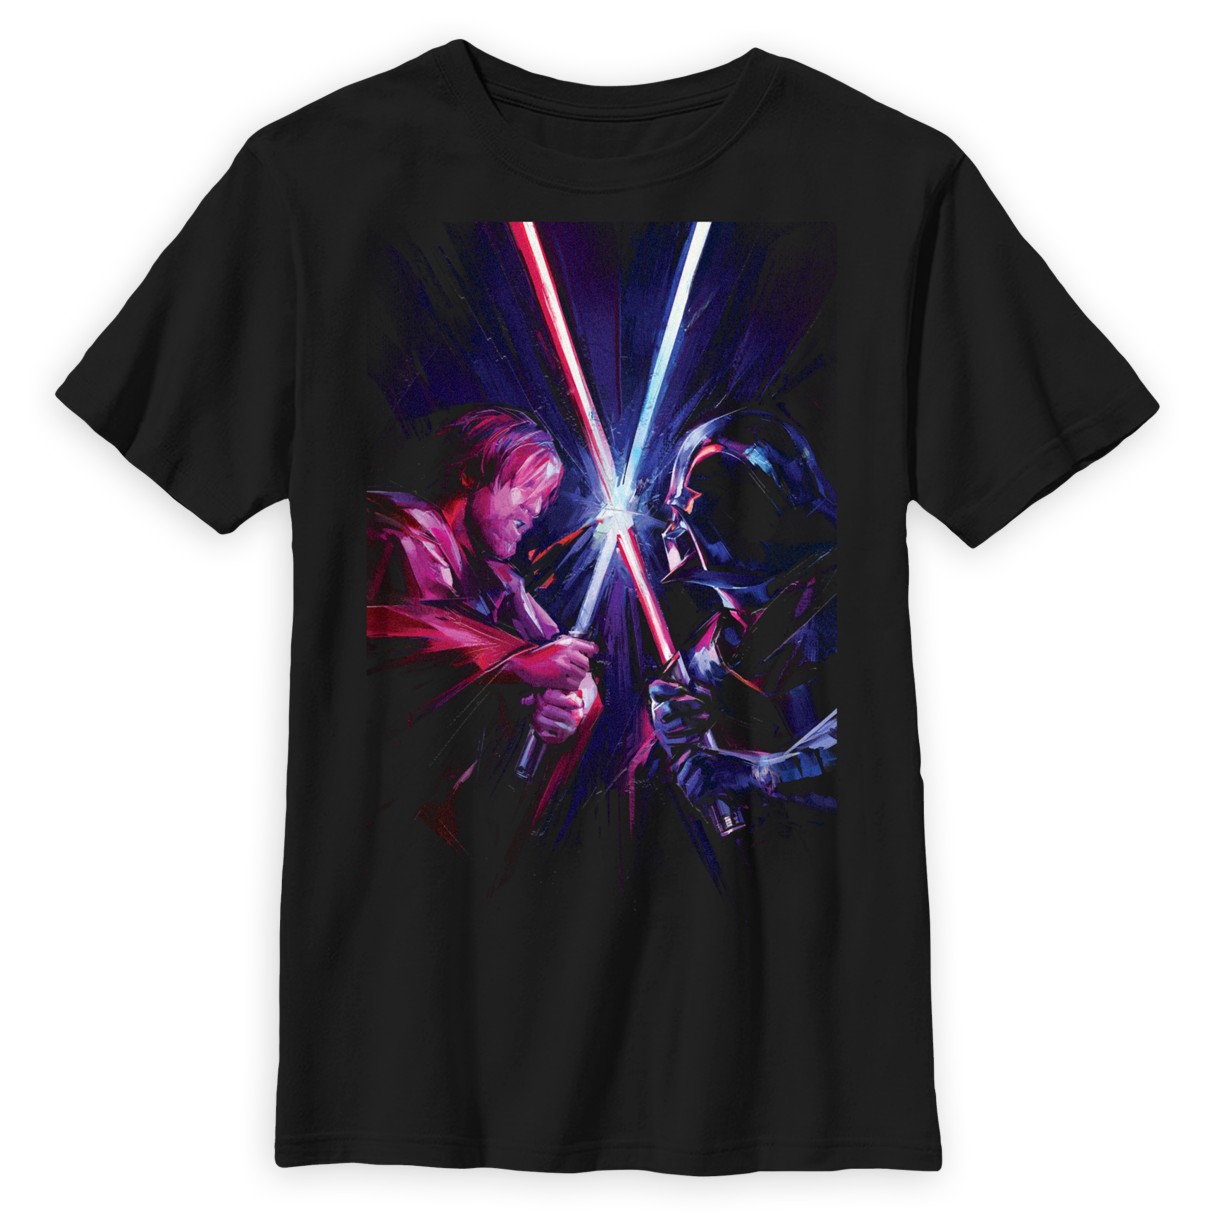 Obi-Wan Kenobi and Darth Vader T-Shirt for Kids – Star Wars: Obi-Wan Kenobi